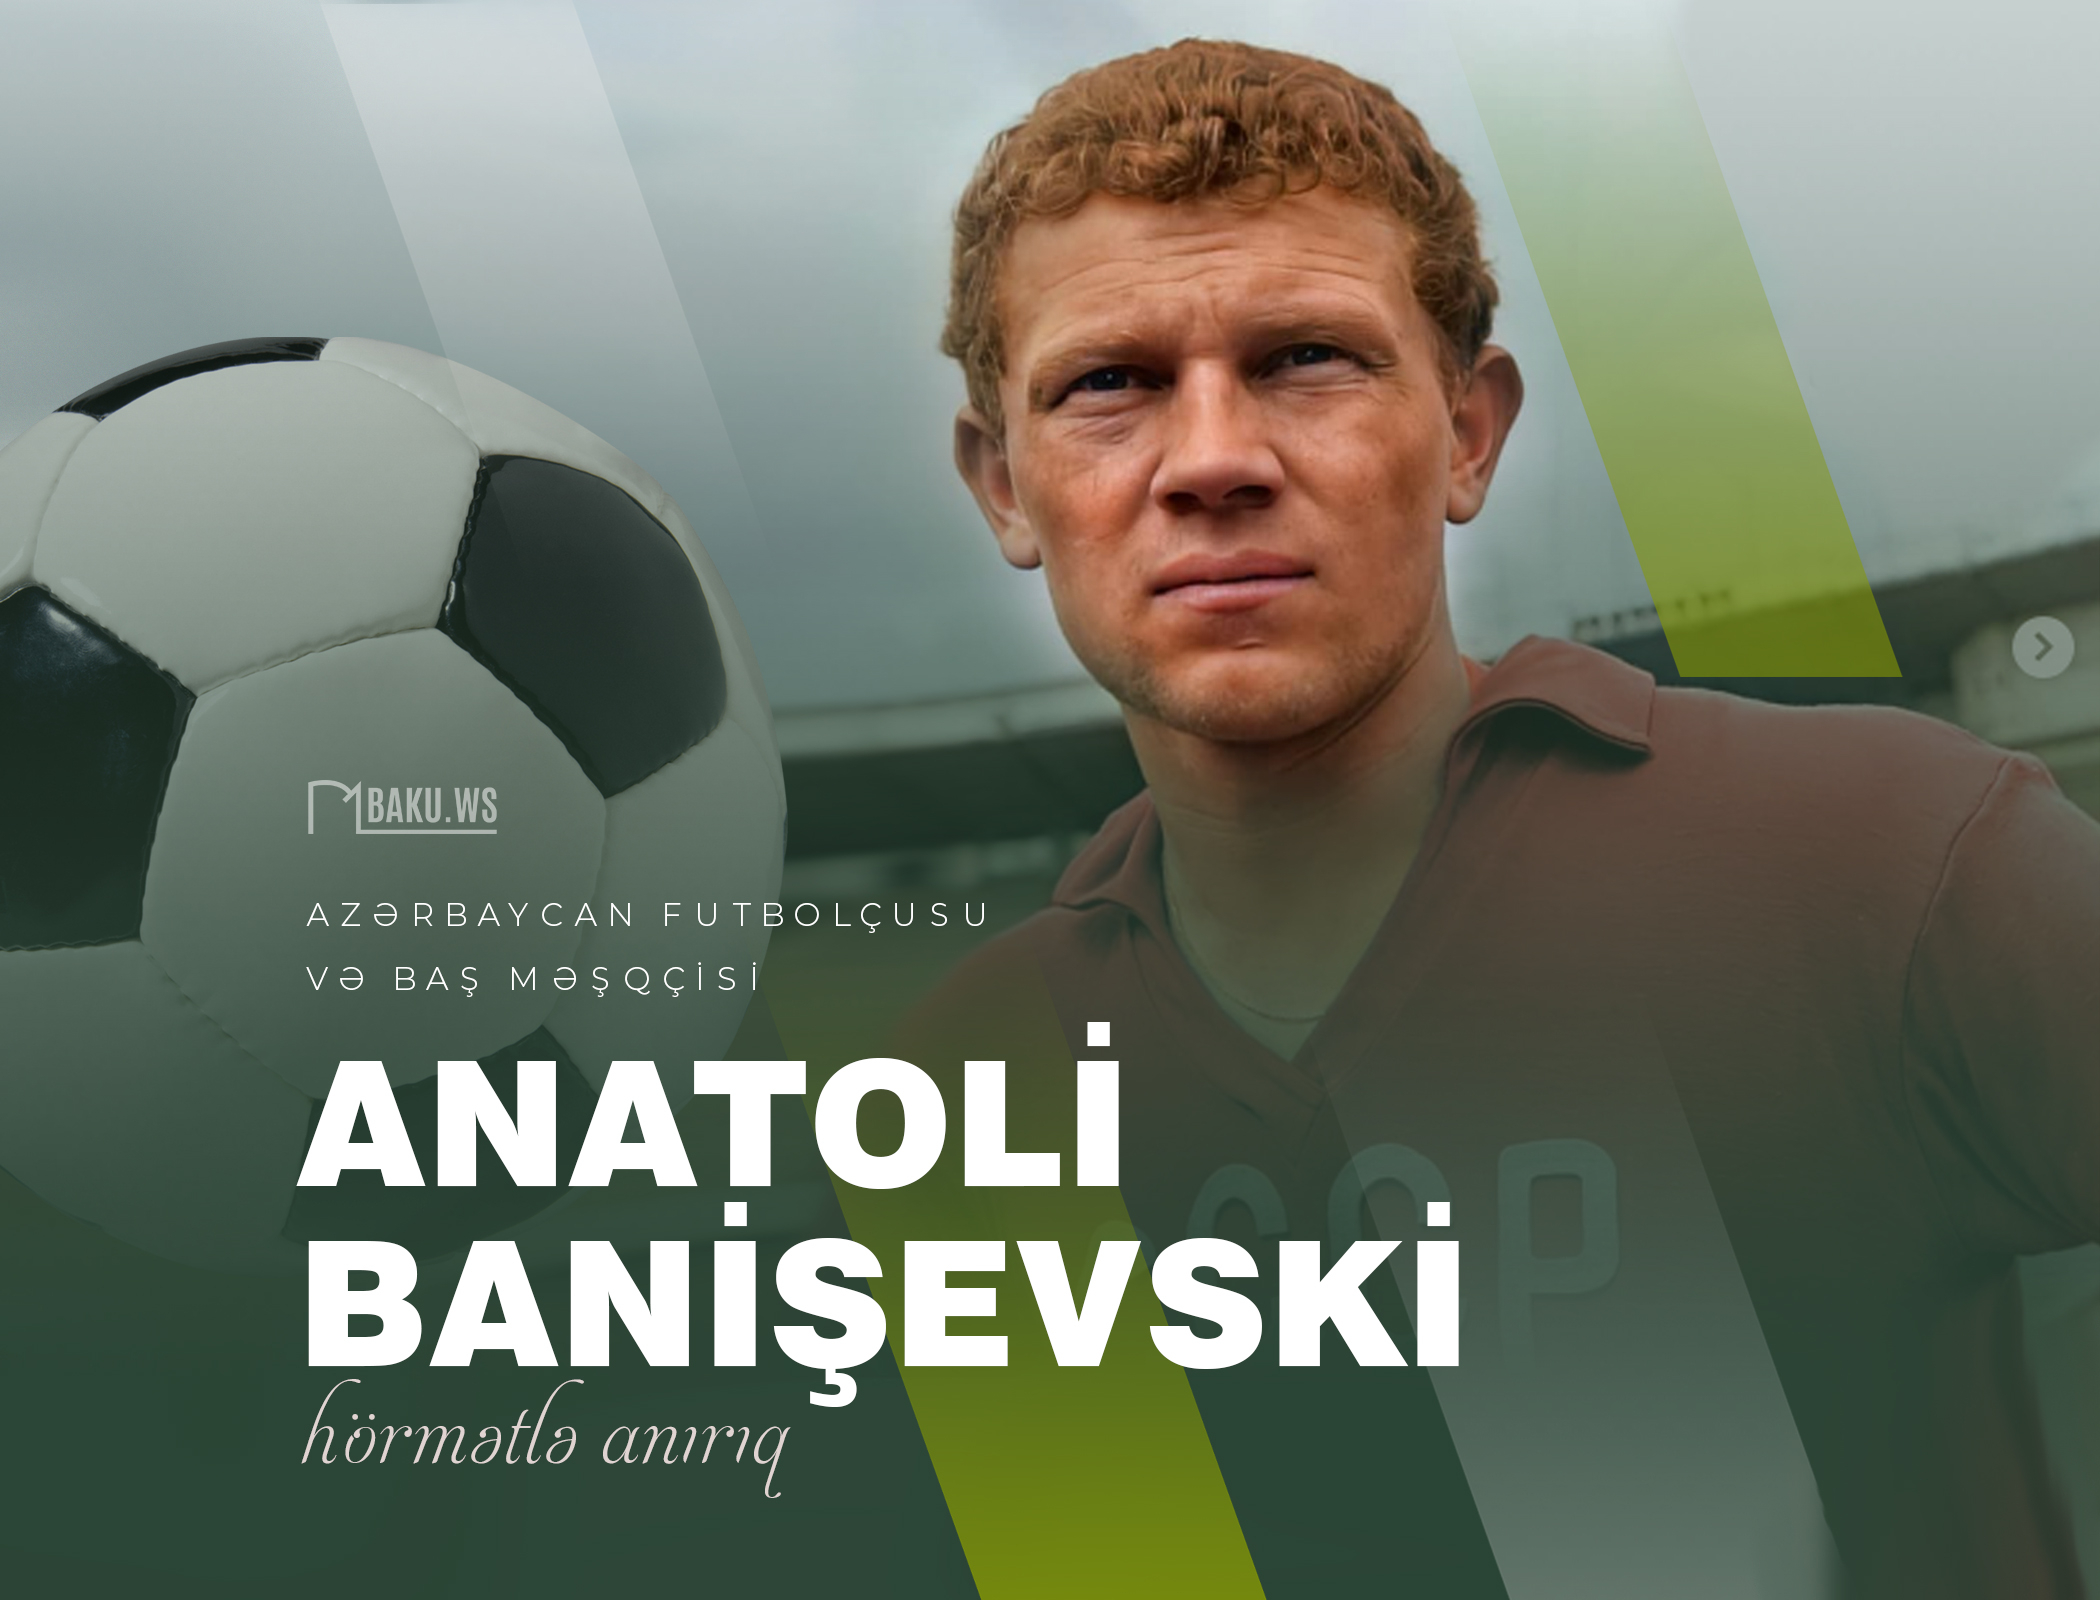 Bu gün Anatoli Banişevskinin anım günüdür